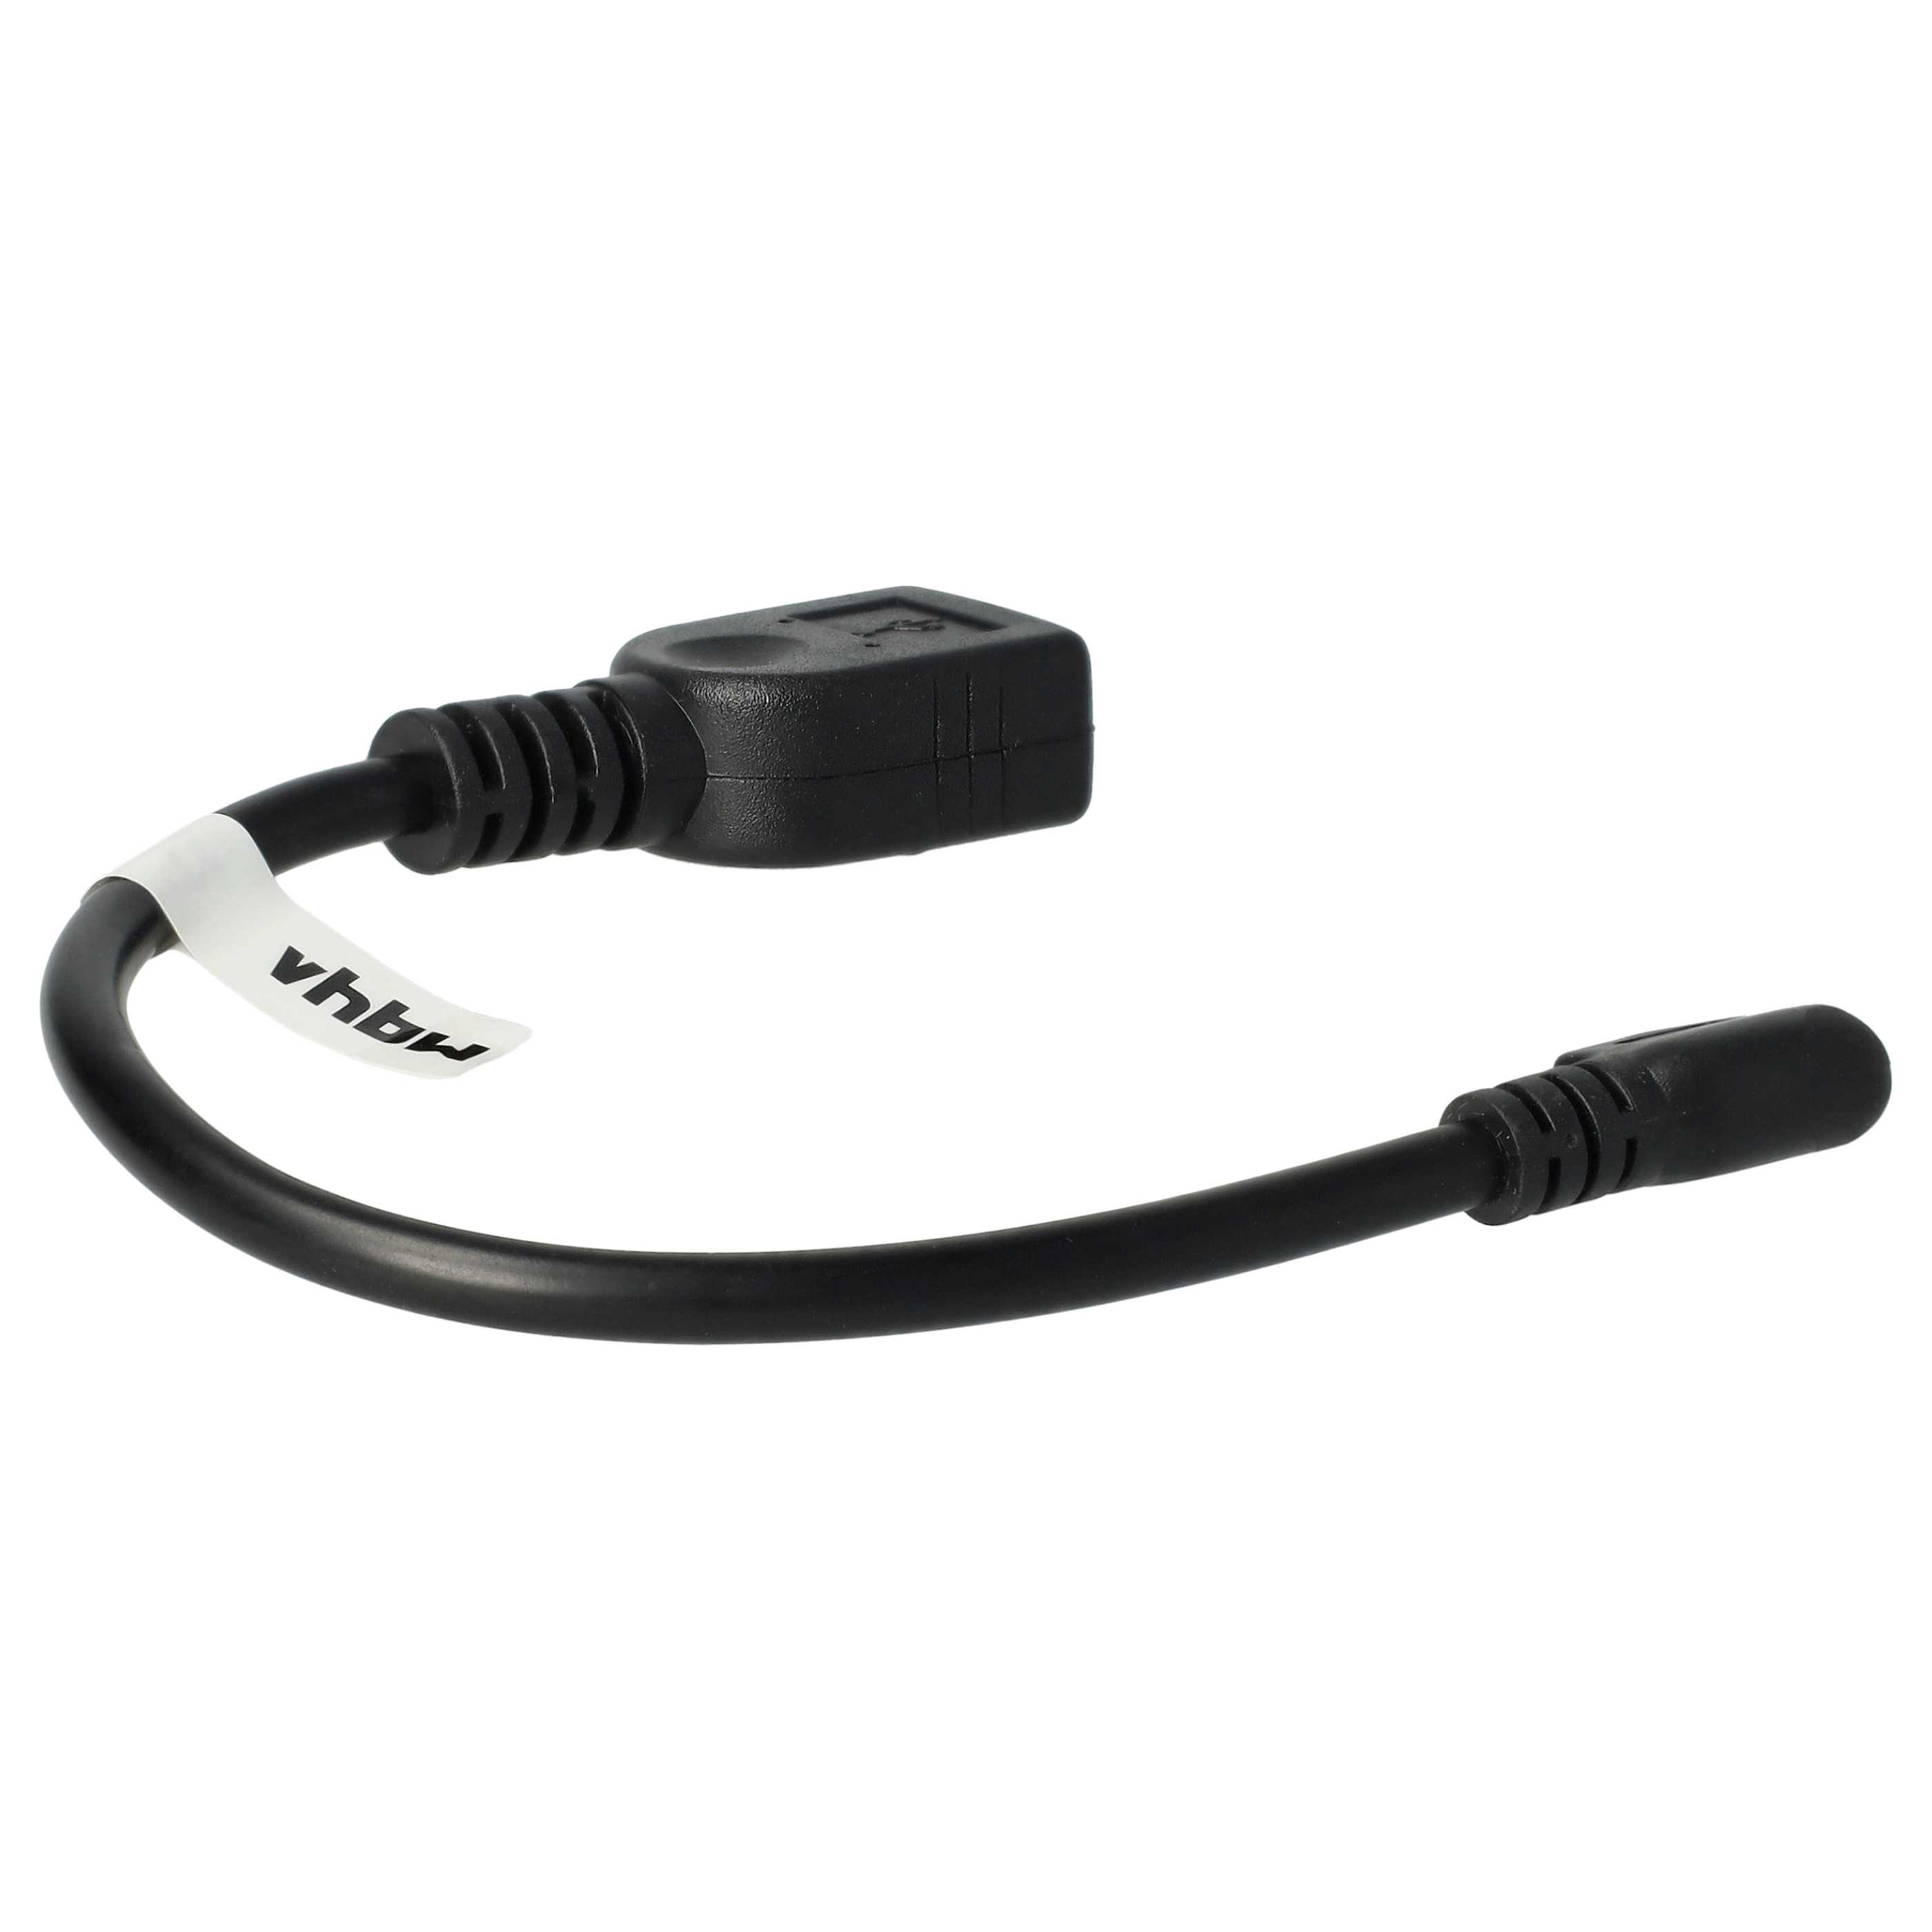 Adattatore OTG daMicro-USB a USB (femmina)a 90° per smartphone, tablet, laptop